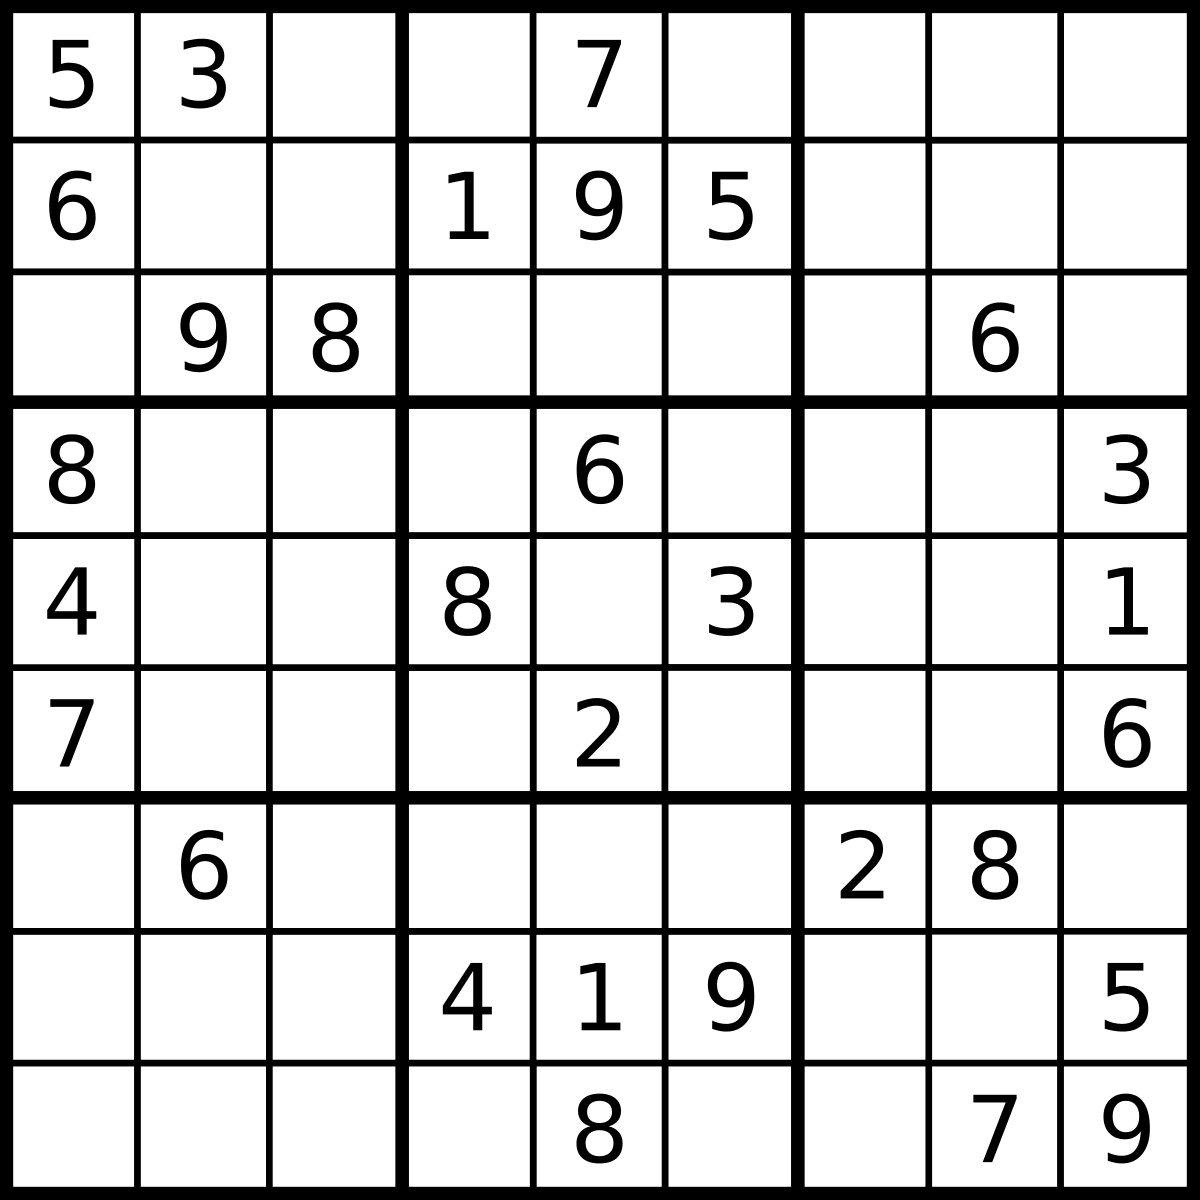 Generating Solving Sudoku Puzzles | by Daniel Sasse | Medium